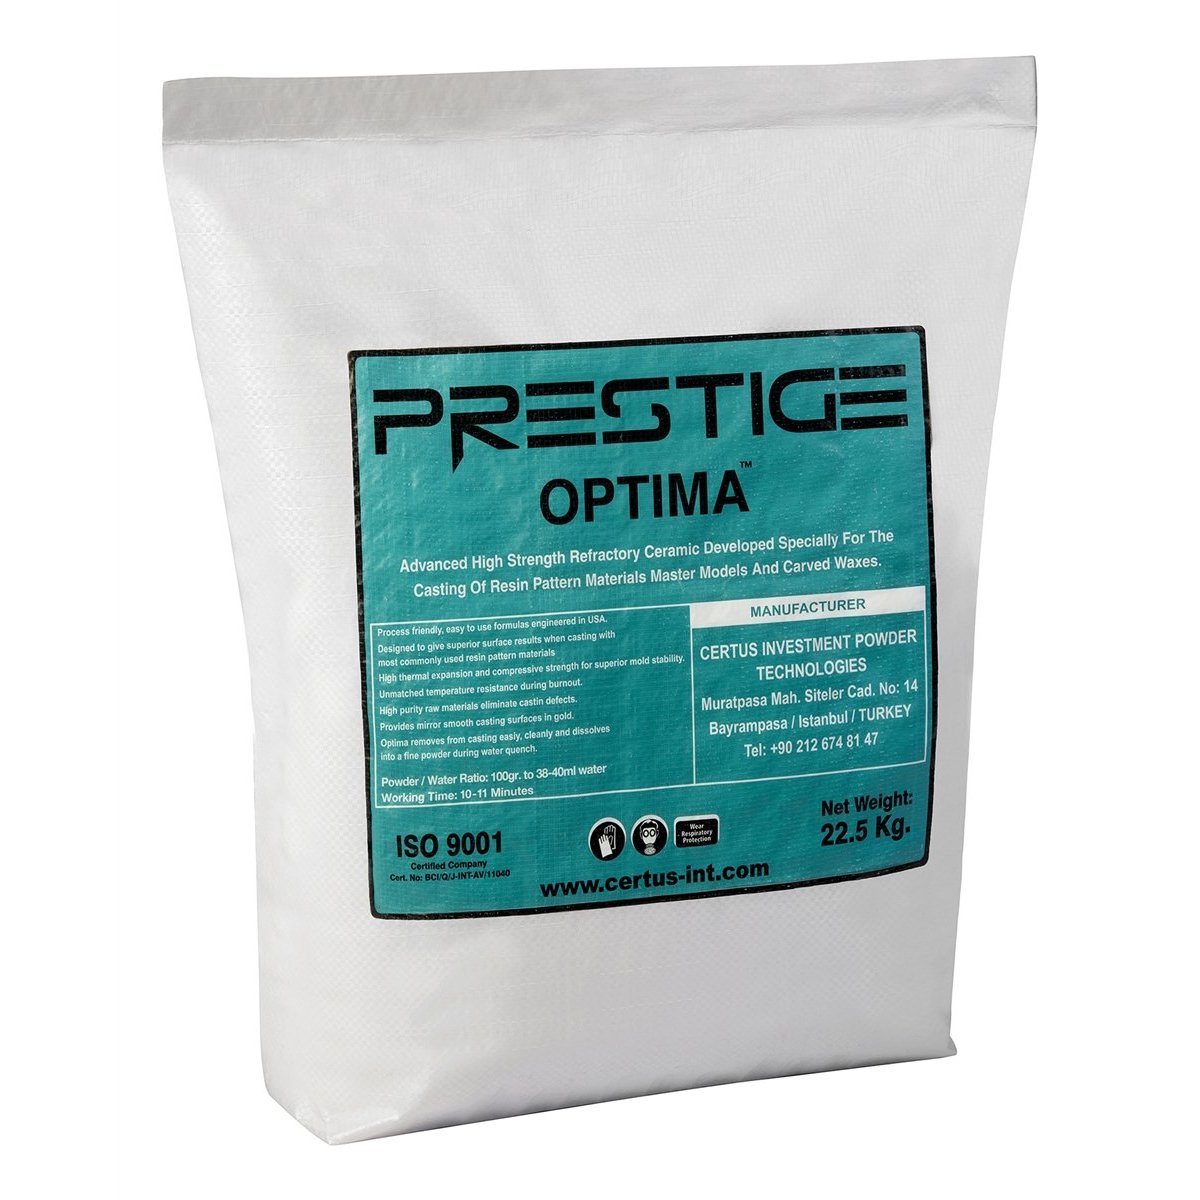 Certus Investment Powder | Prestige OPTIMA (49lb Bag)